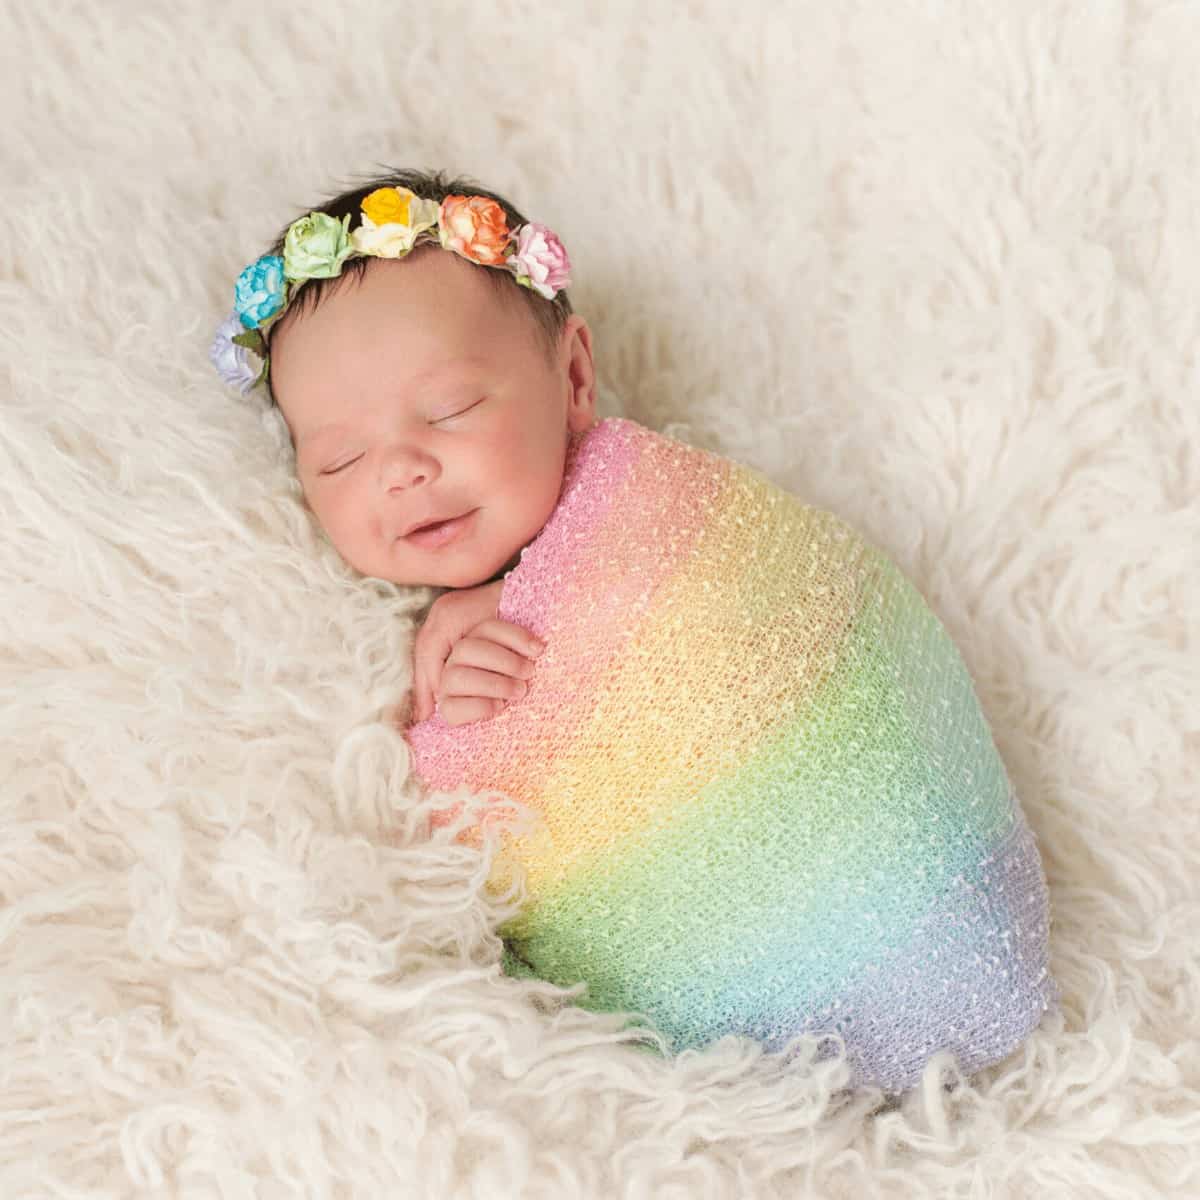 newborn-baby-with-dark-hair-and-rainbow-colored-flower-headband-lying-on-fuzzy-blanket-swaddled-in-rainbow-blanket